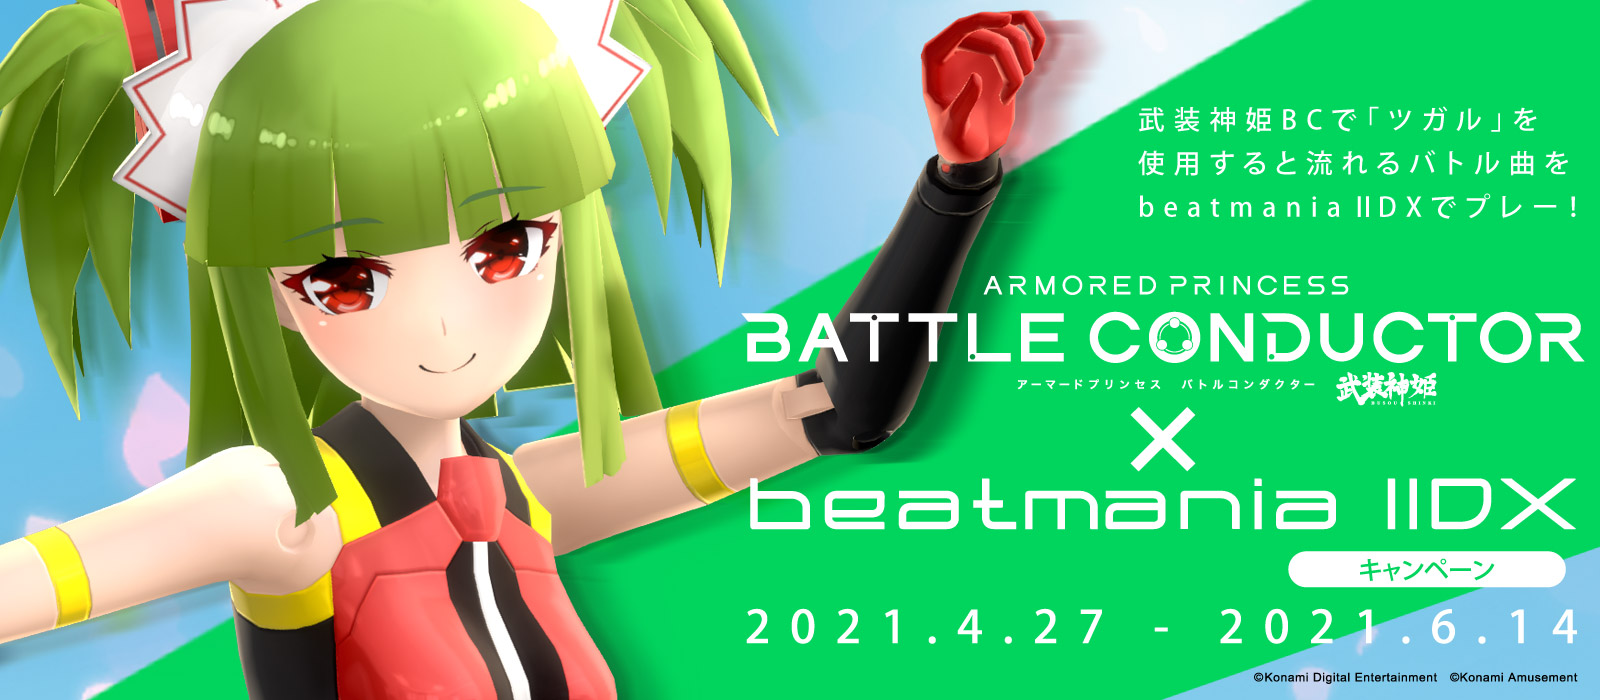 KONAMI 音楽ゲーム「武装神姫」と「beatmania IIDX」のコラボとしてらっぷびとが参加した楽曲が無条件開放